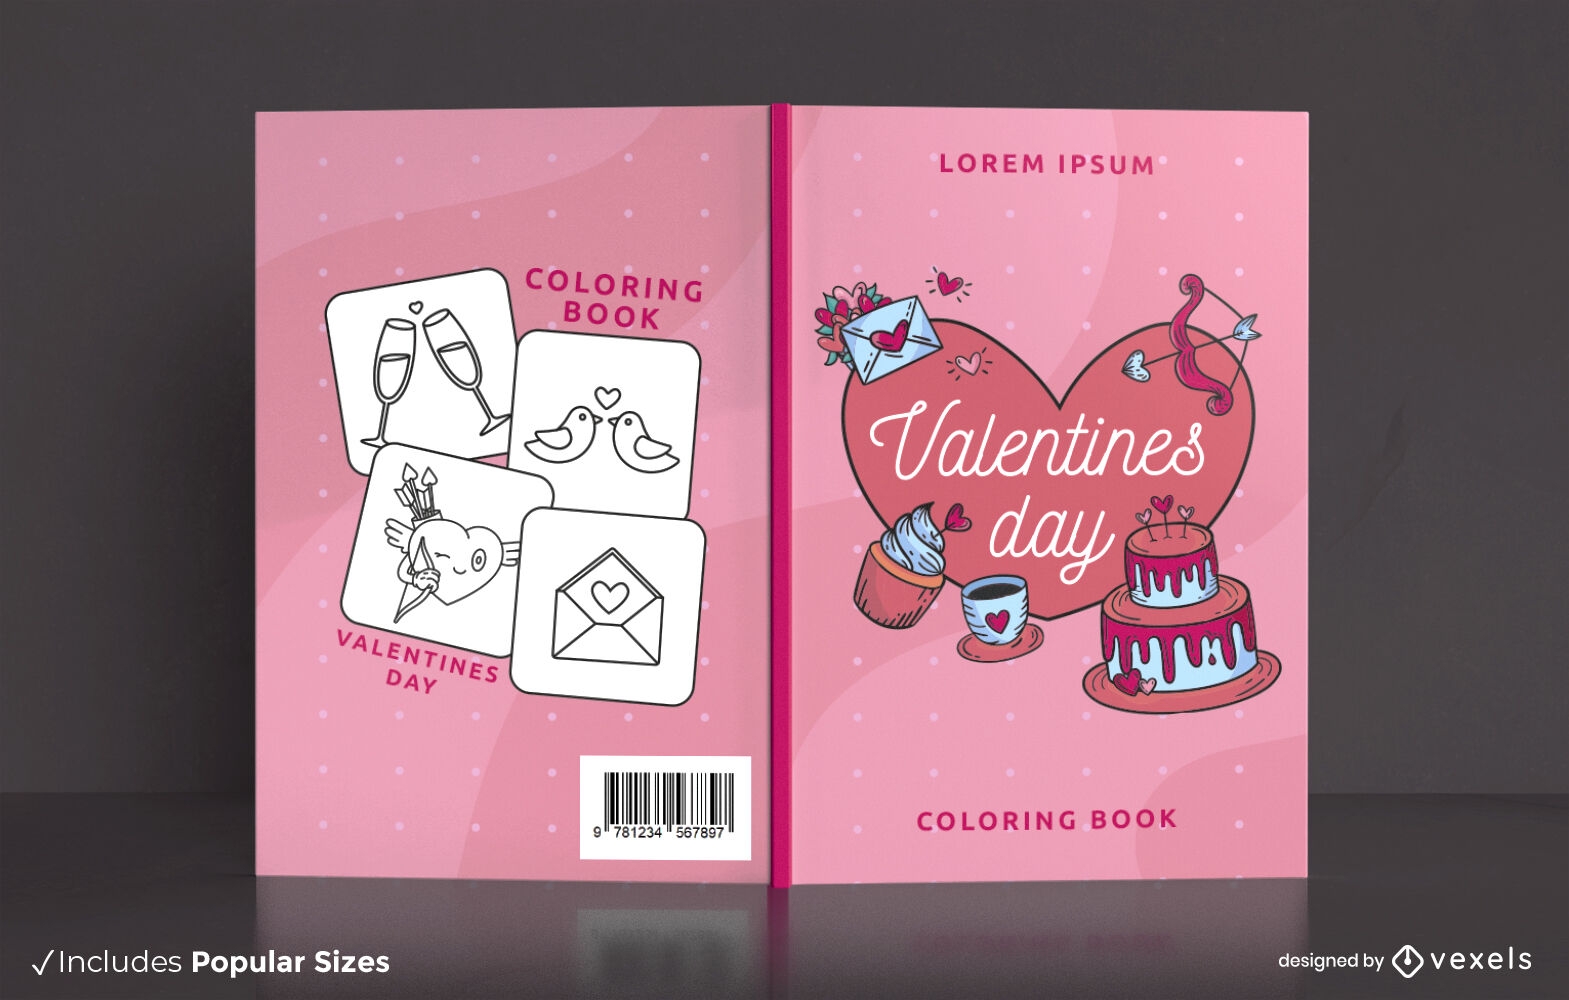 Descarga Vector De Diseño De Portada De Libro Para Colorear De San Valentín